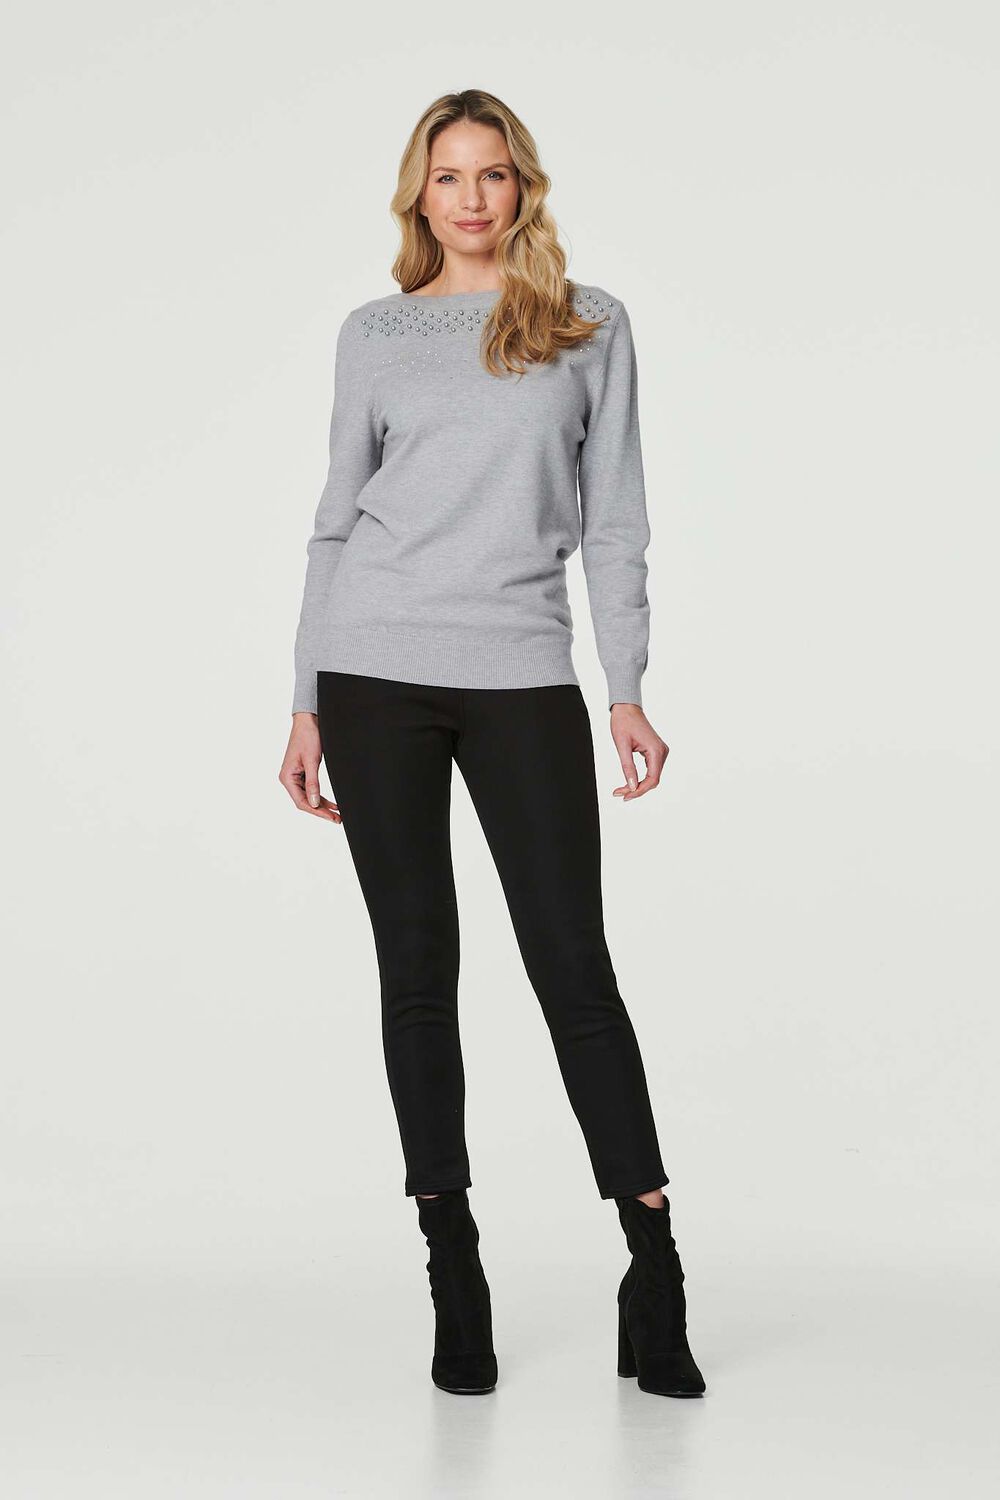 Izabel London Grey - Embellished Relaxed Knit Jumper, Size: 16